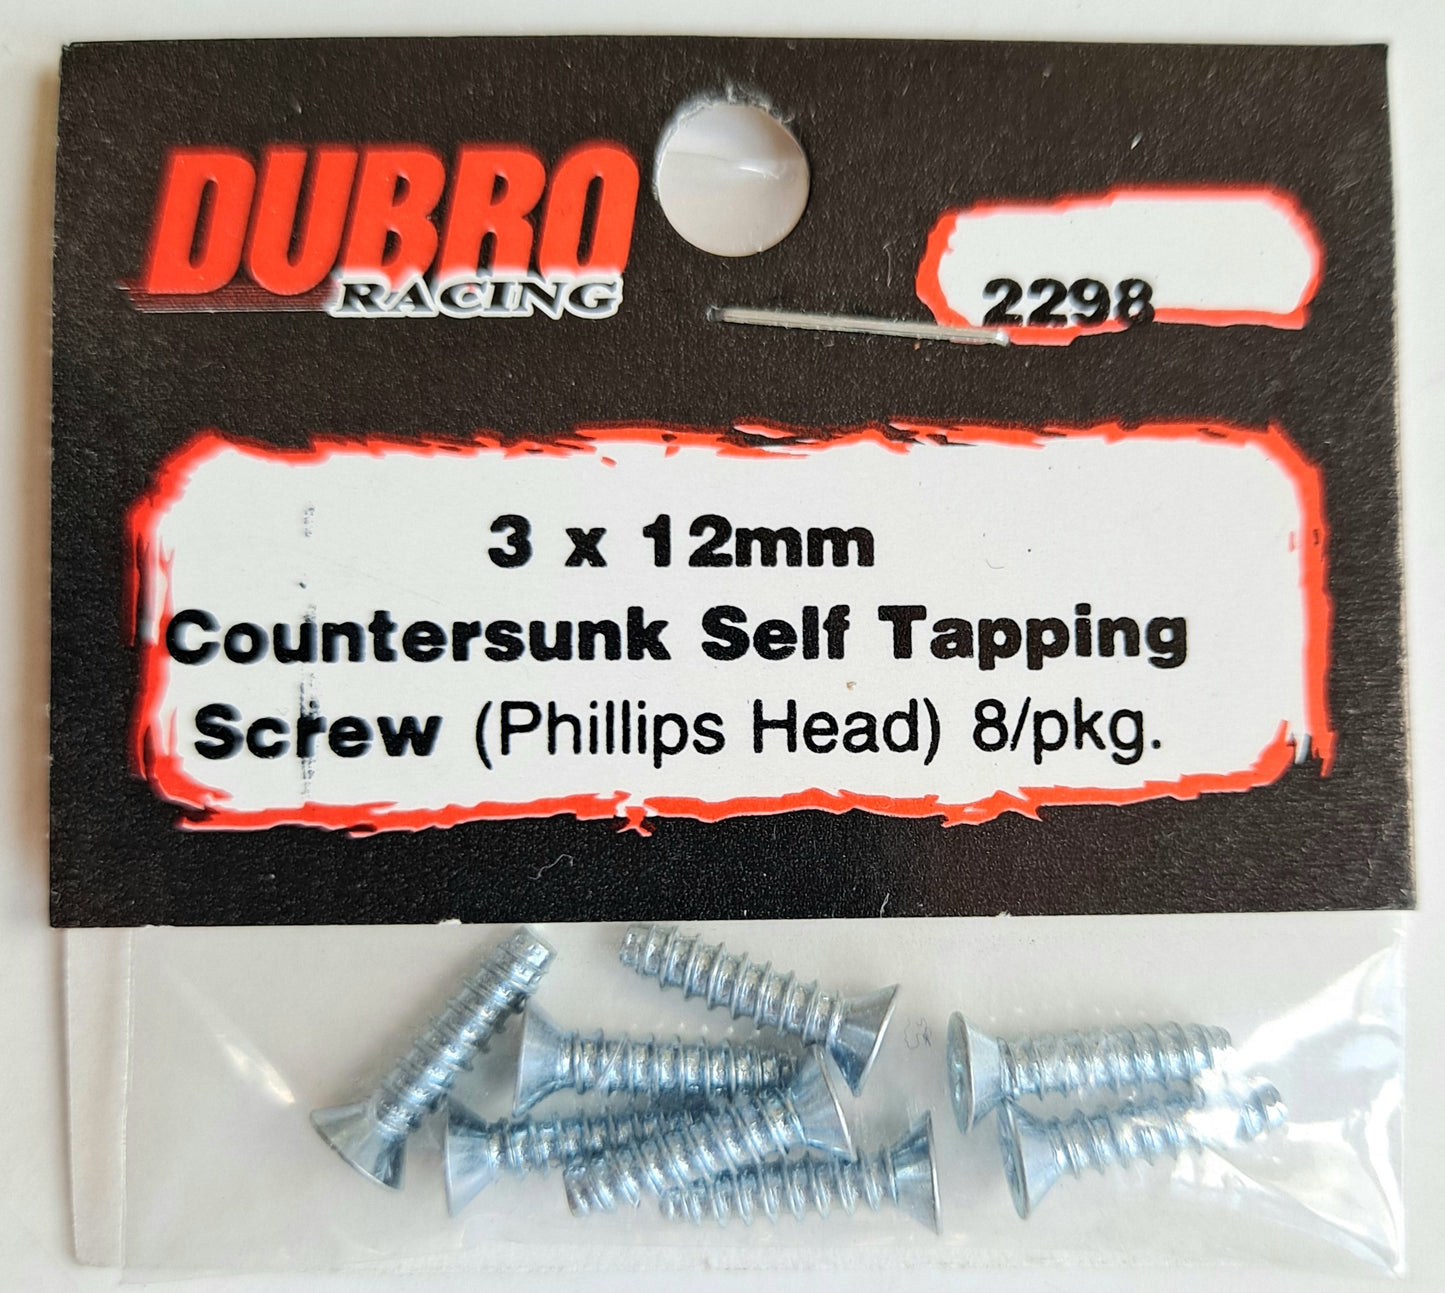 Du-Bro 3 x 12mm Countersunk Self Tapping Screw Phillips Head (8 pcs) #2298